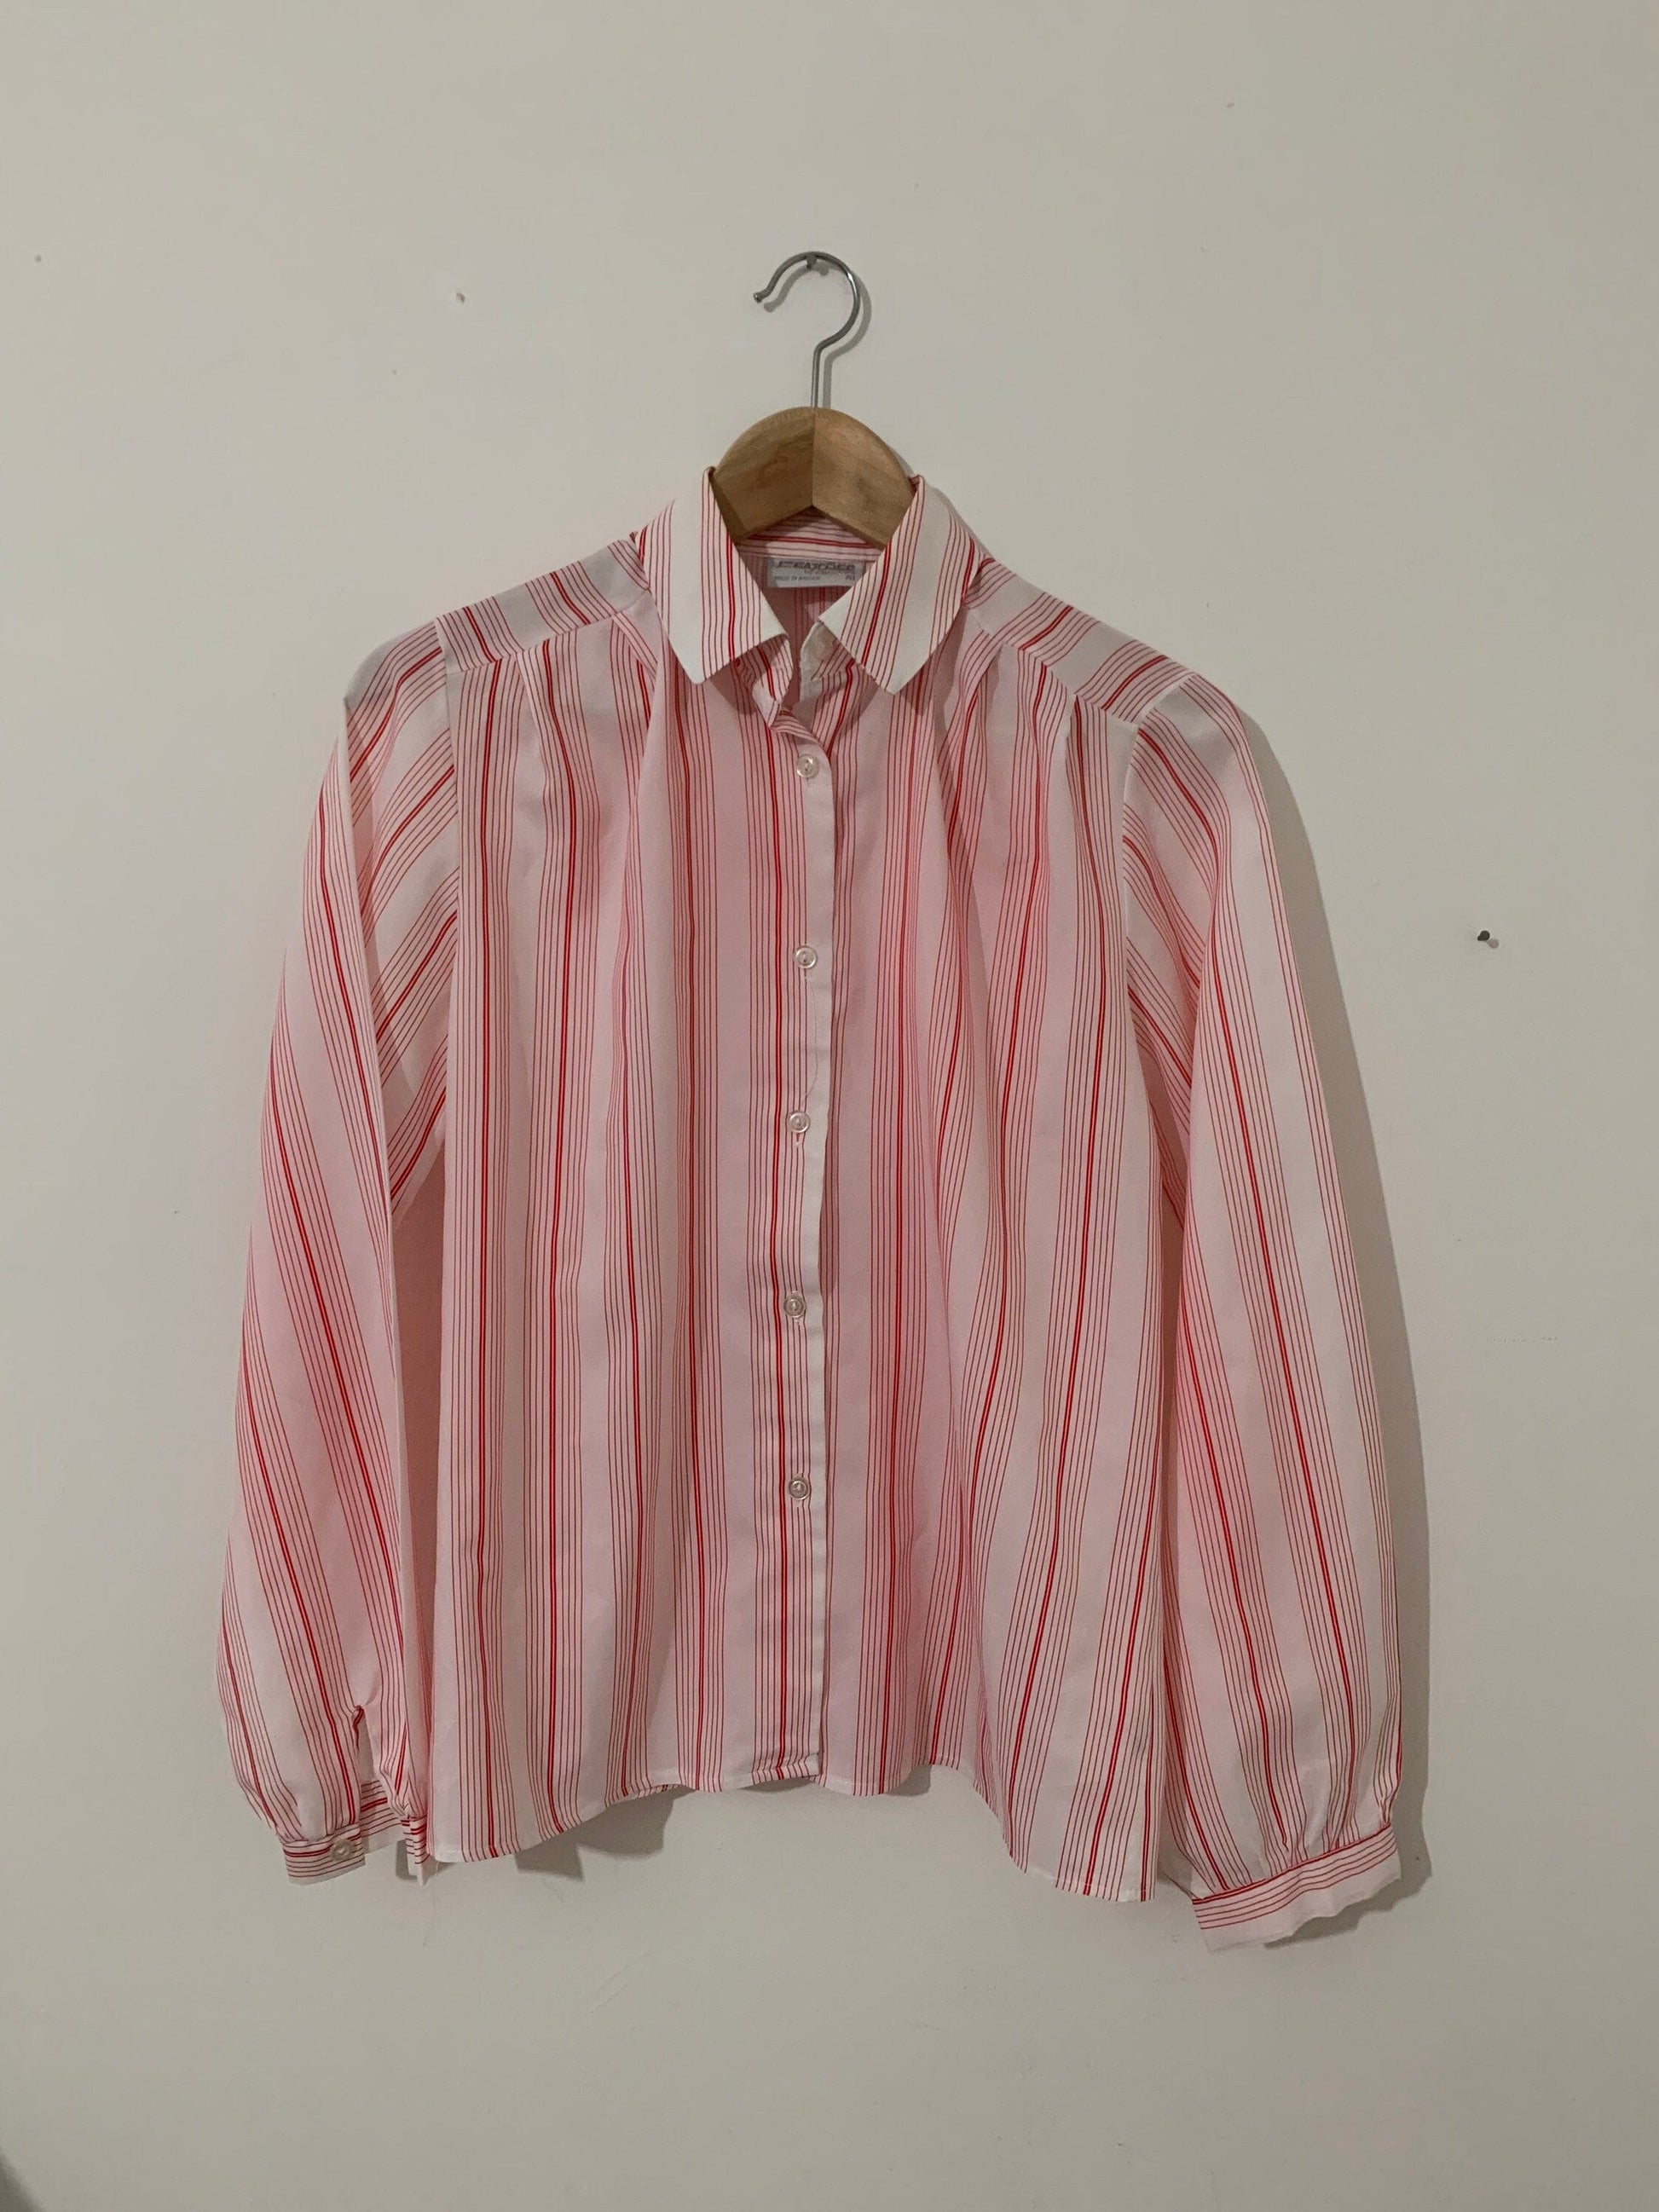 Vintage red Blouse Shirt red and white stripe pattern blouse vintage Debenhams 80s